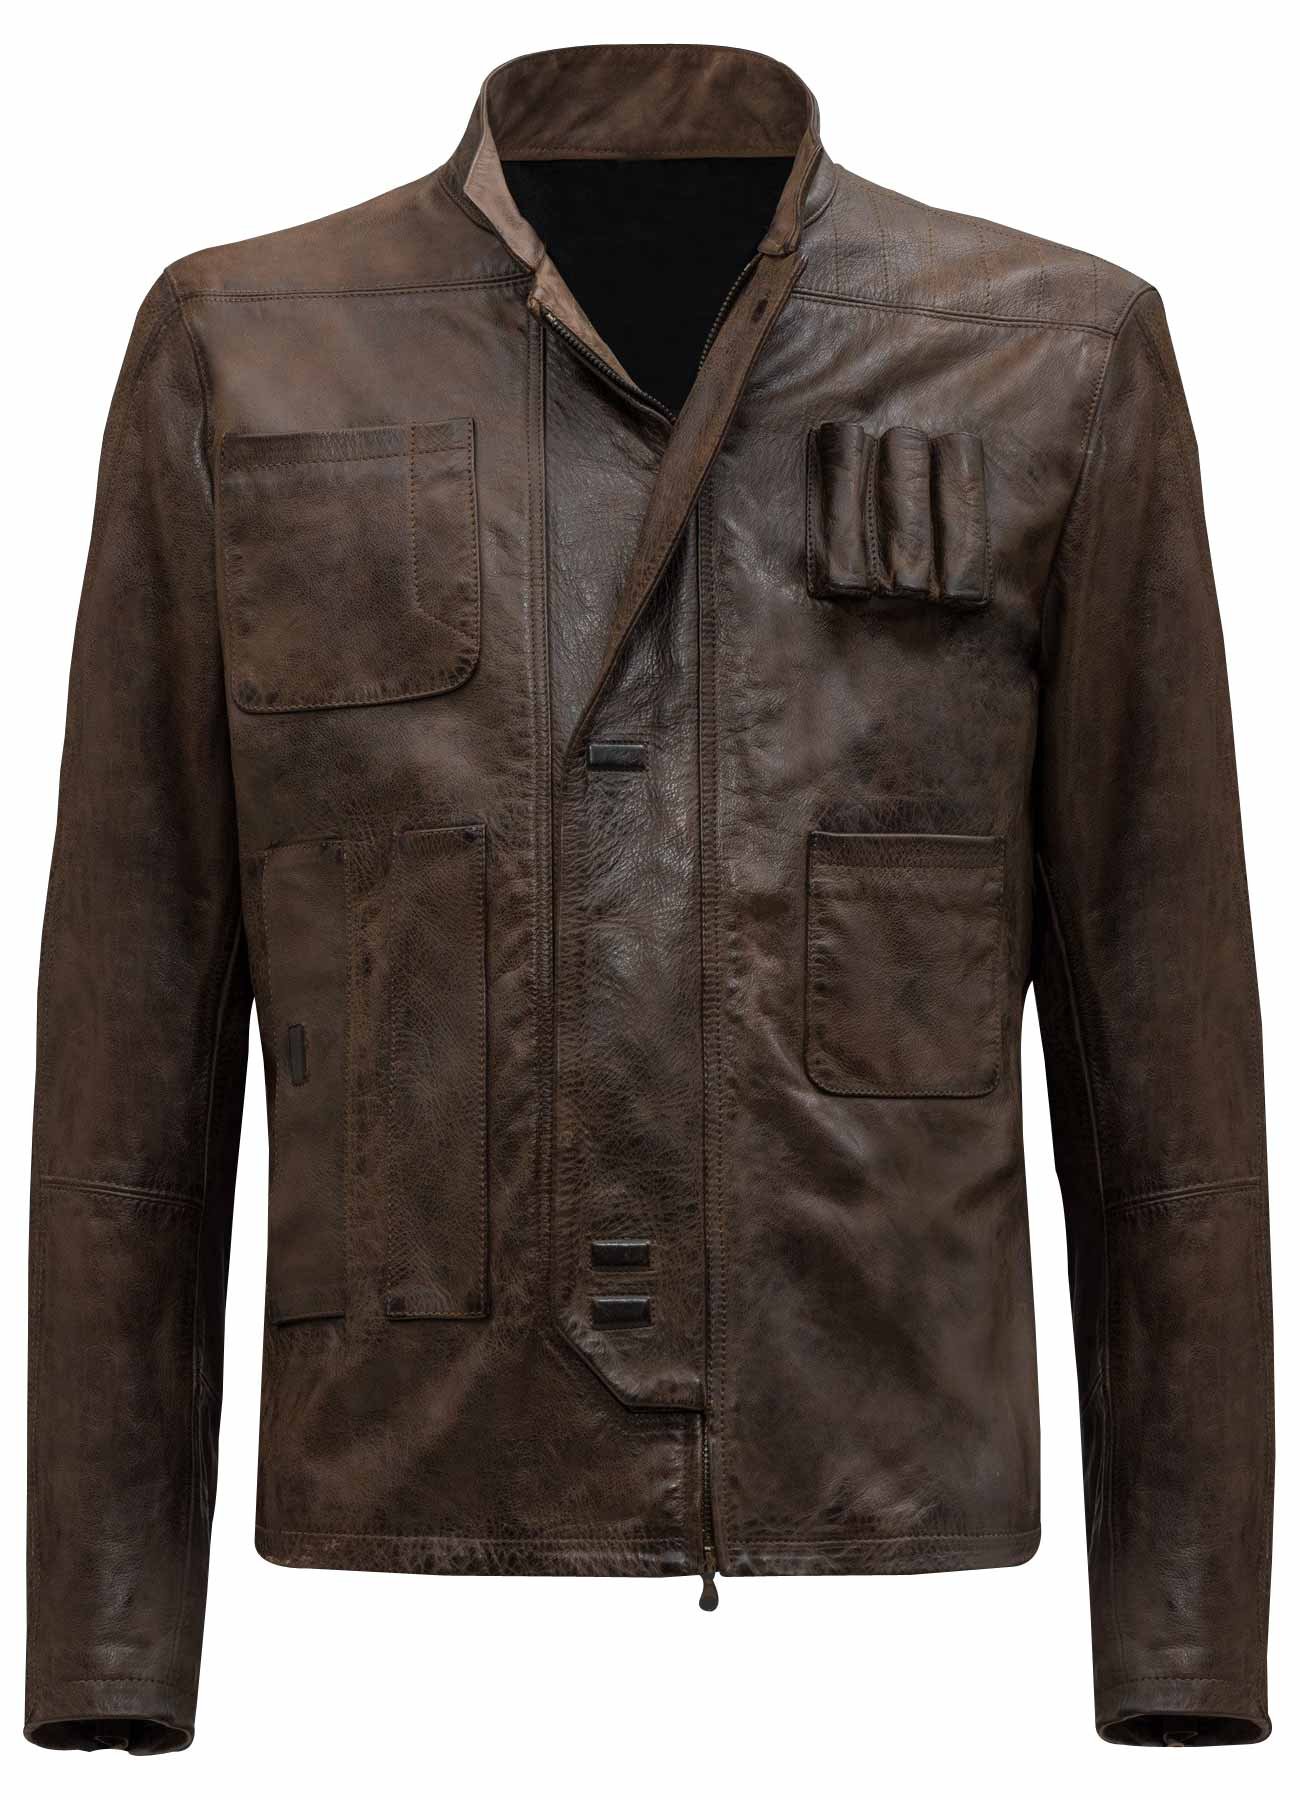 Star Wars TFA Han Solo Leather Jacket